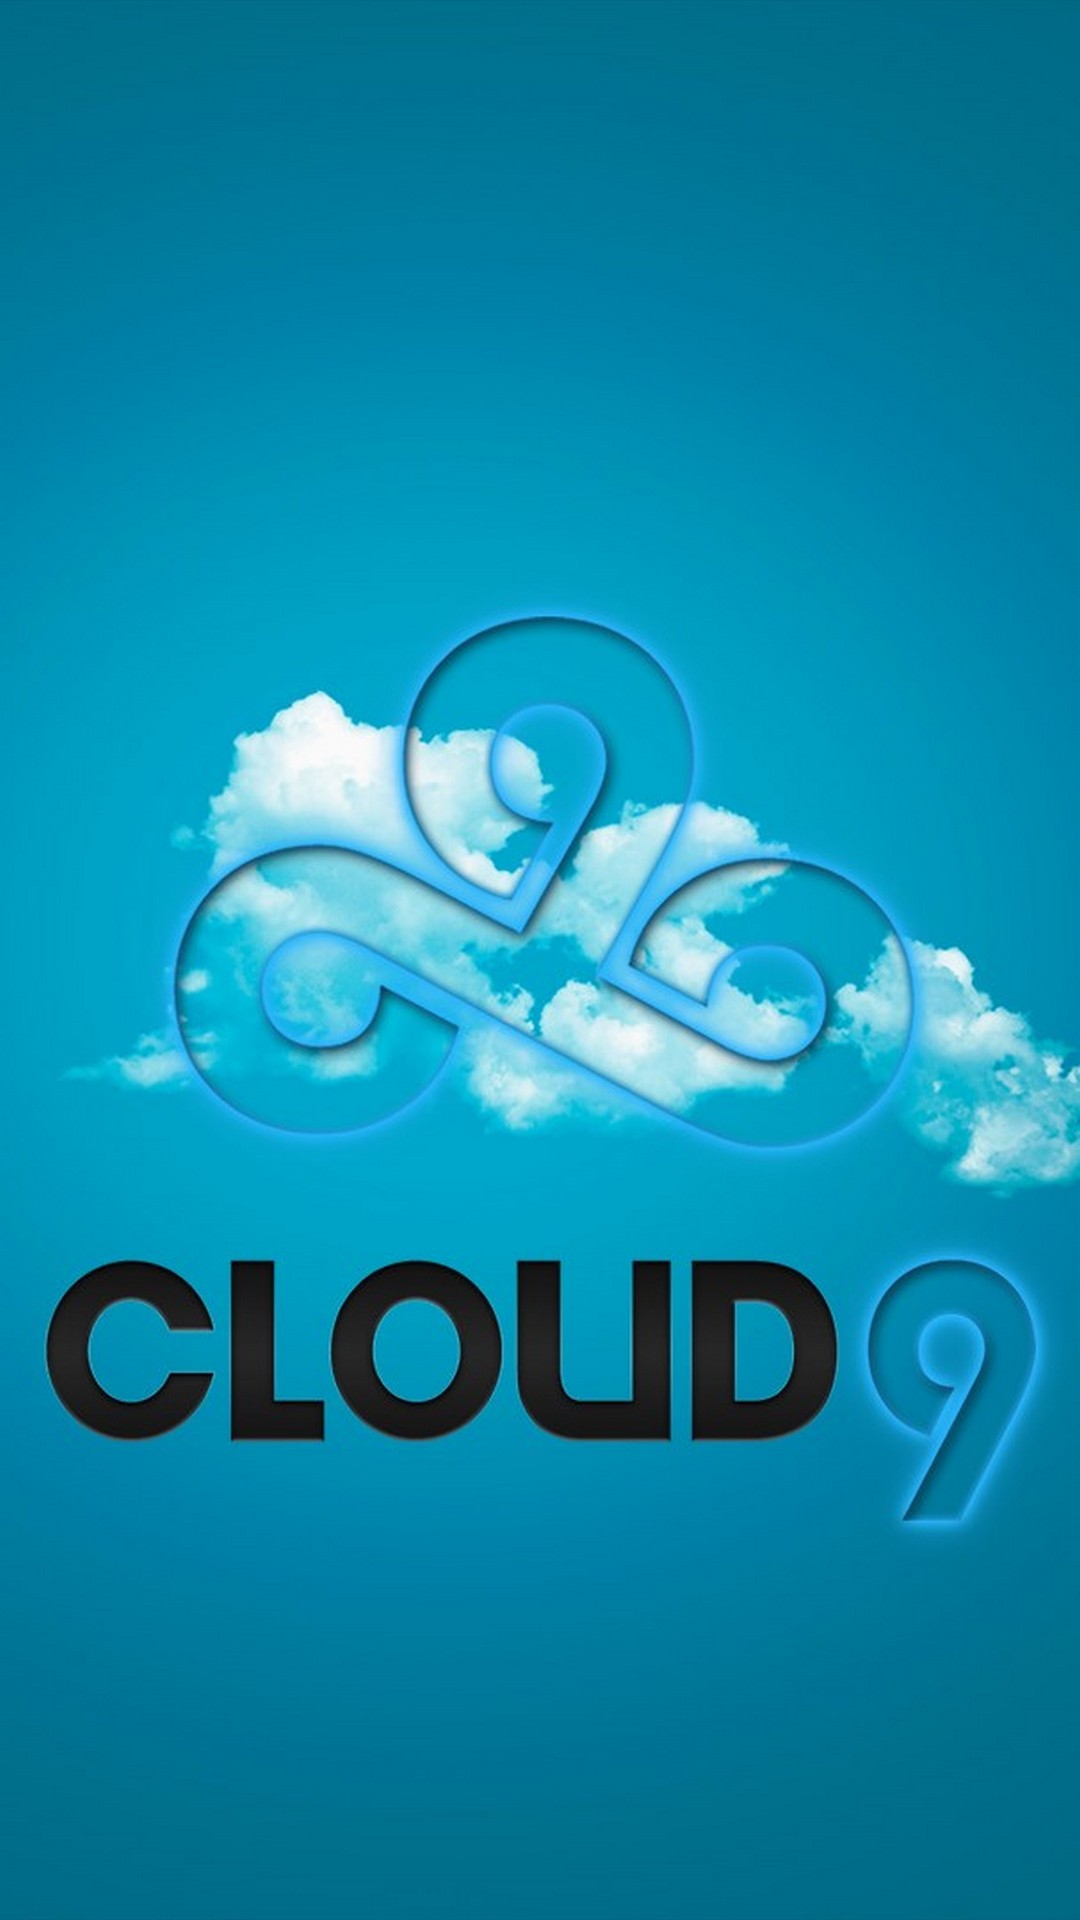 nuvola 9 sfondi per iphone,acqua,testo,blu,font,turchese